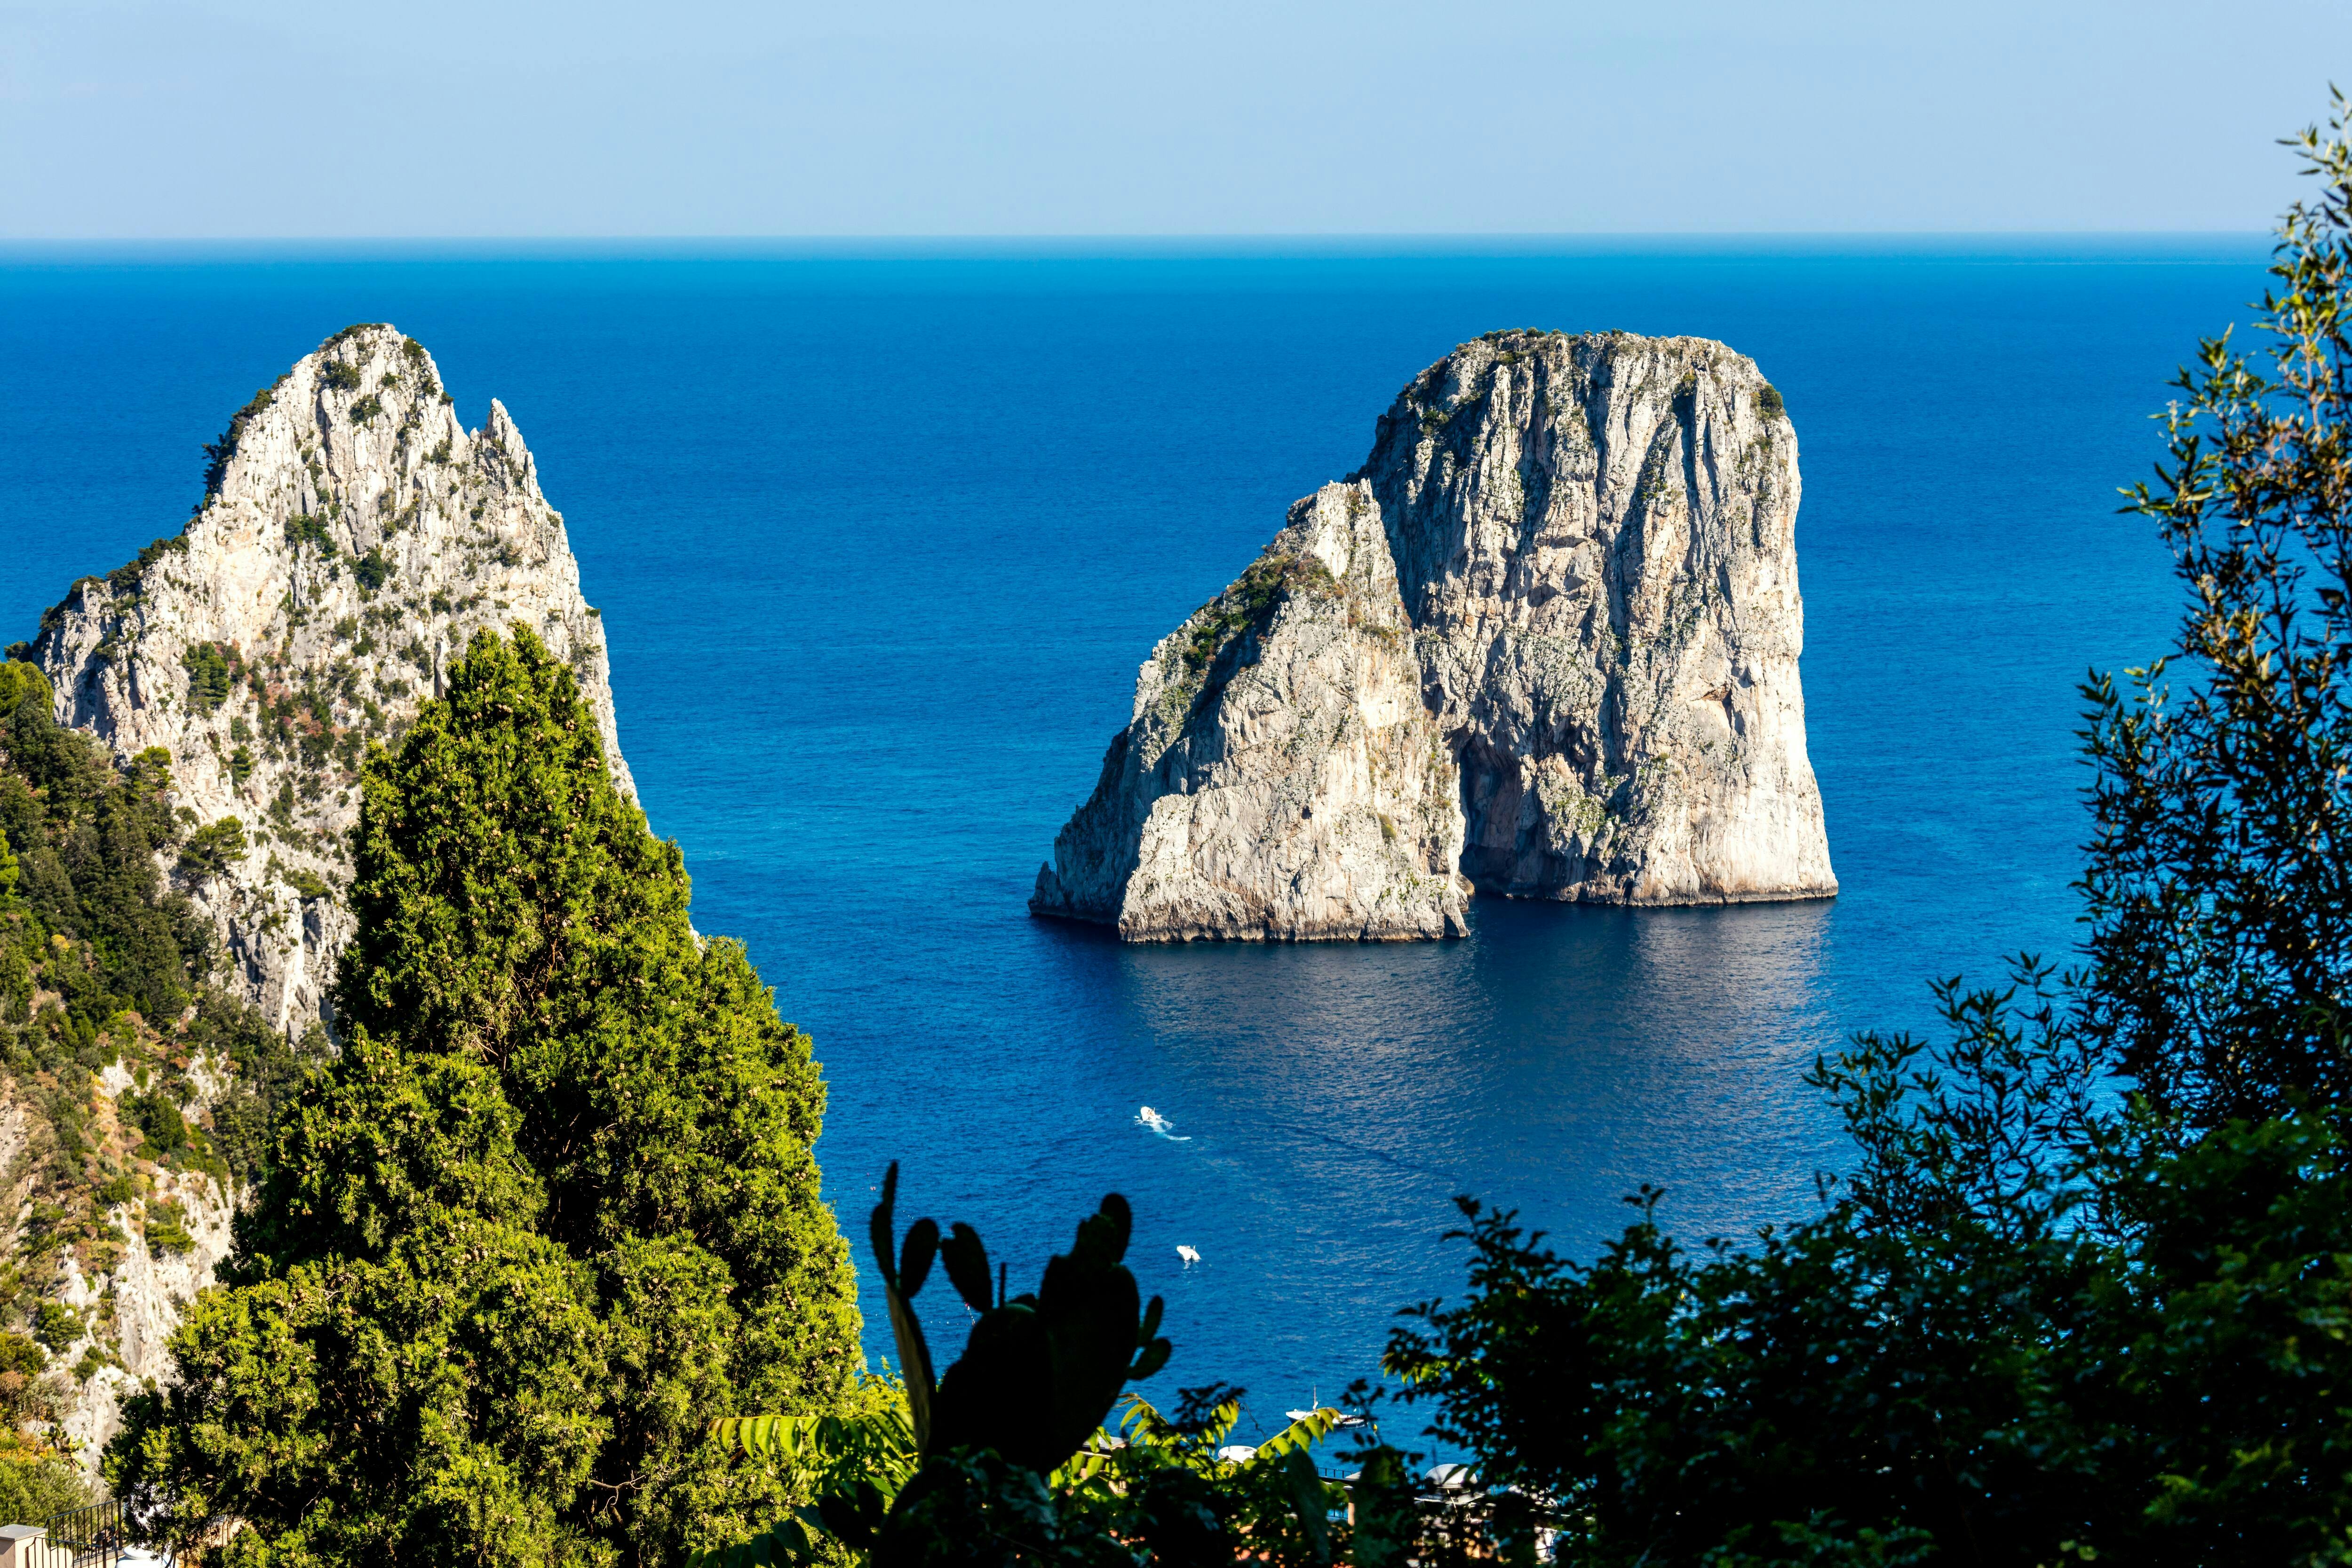 Capri Cruise from Positano